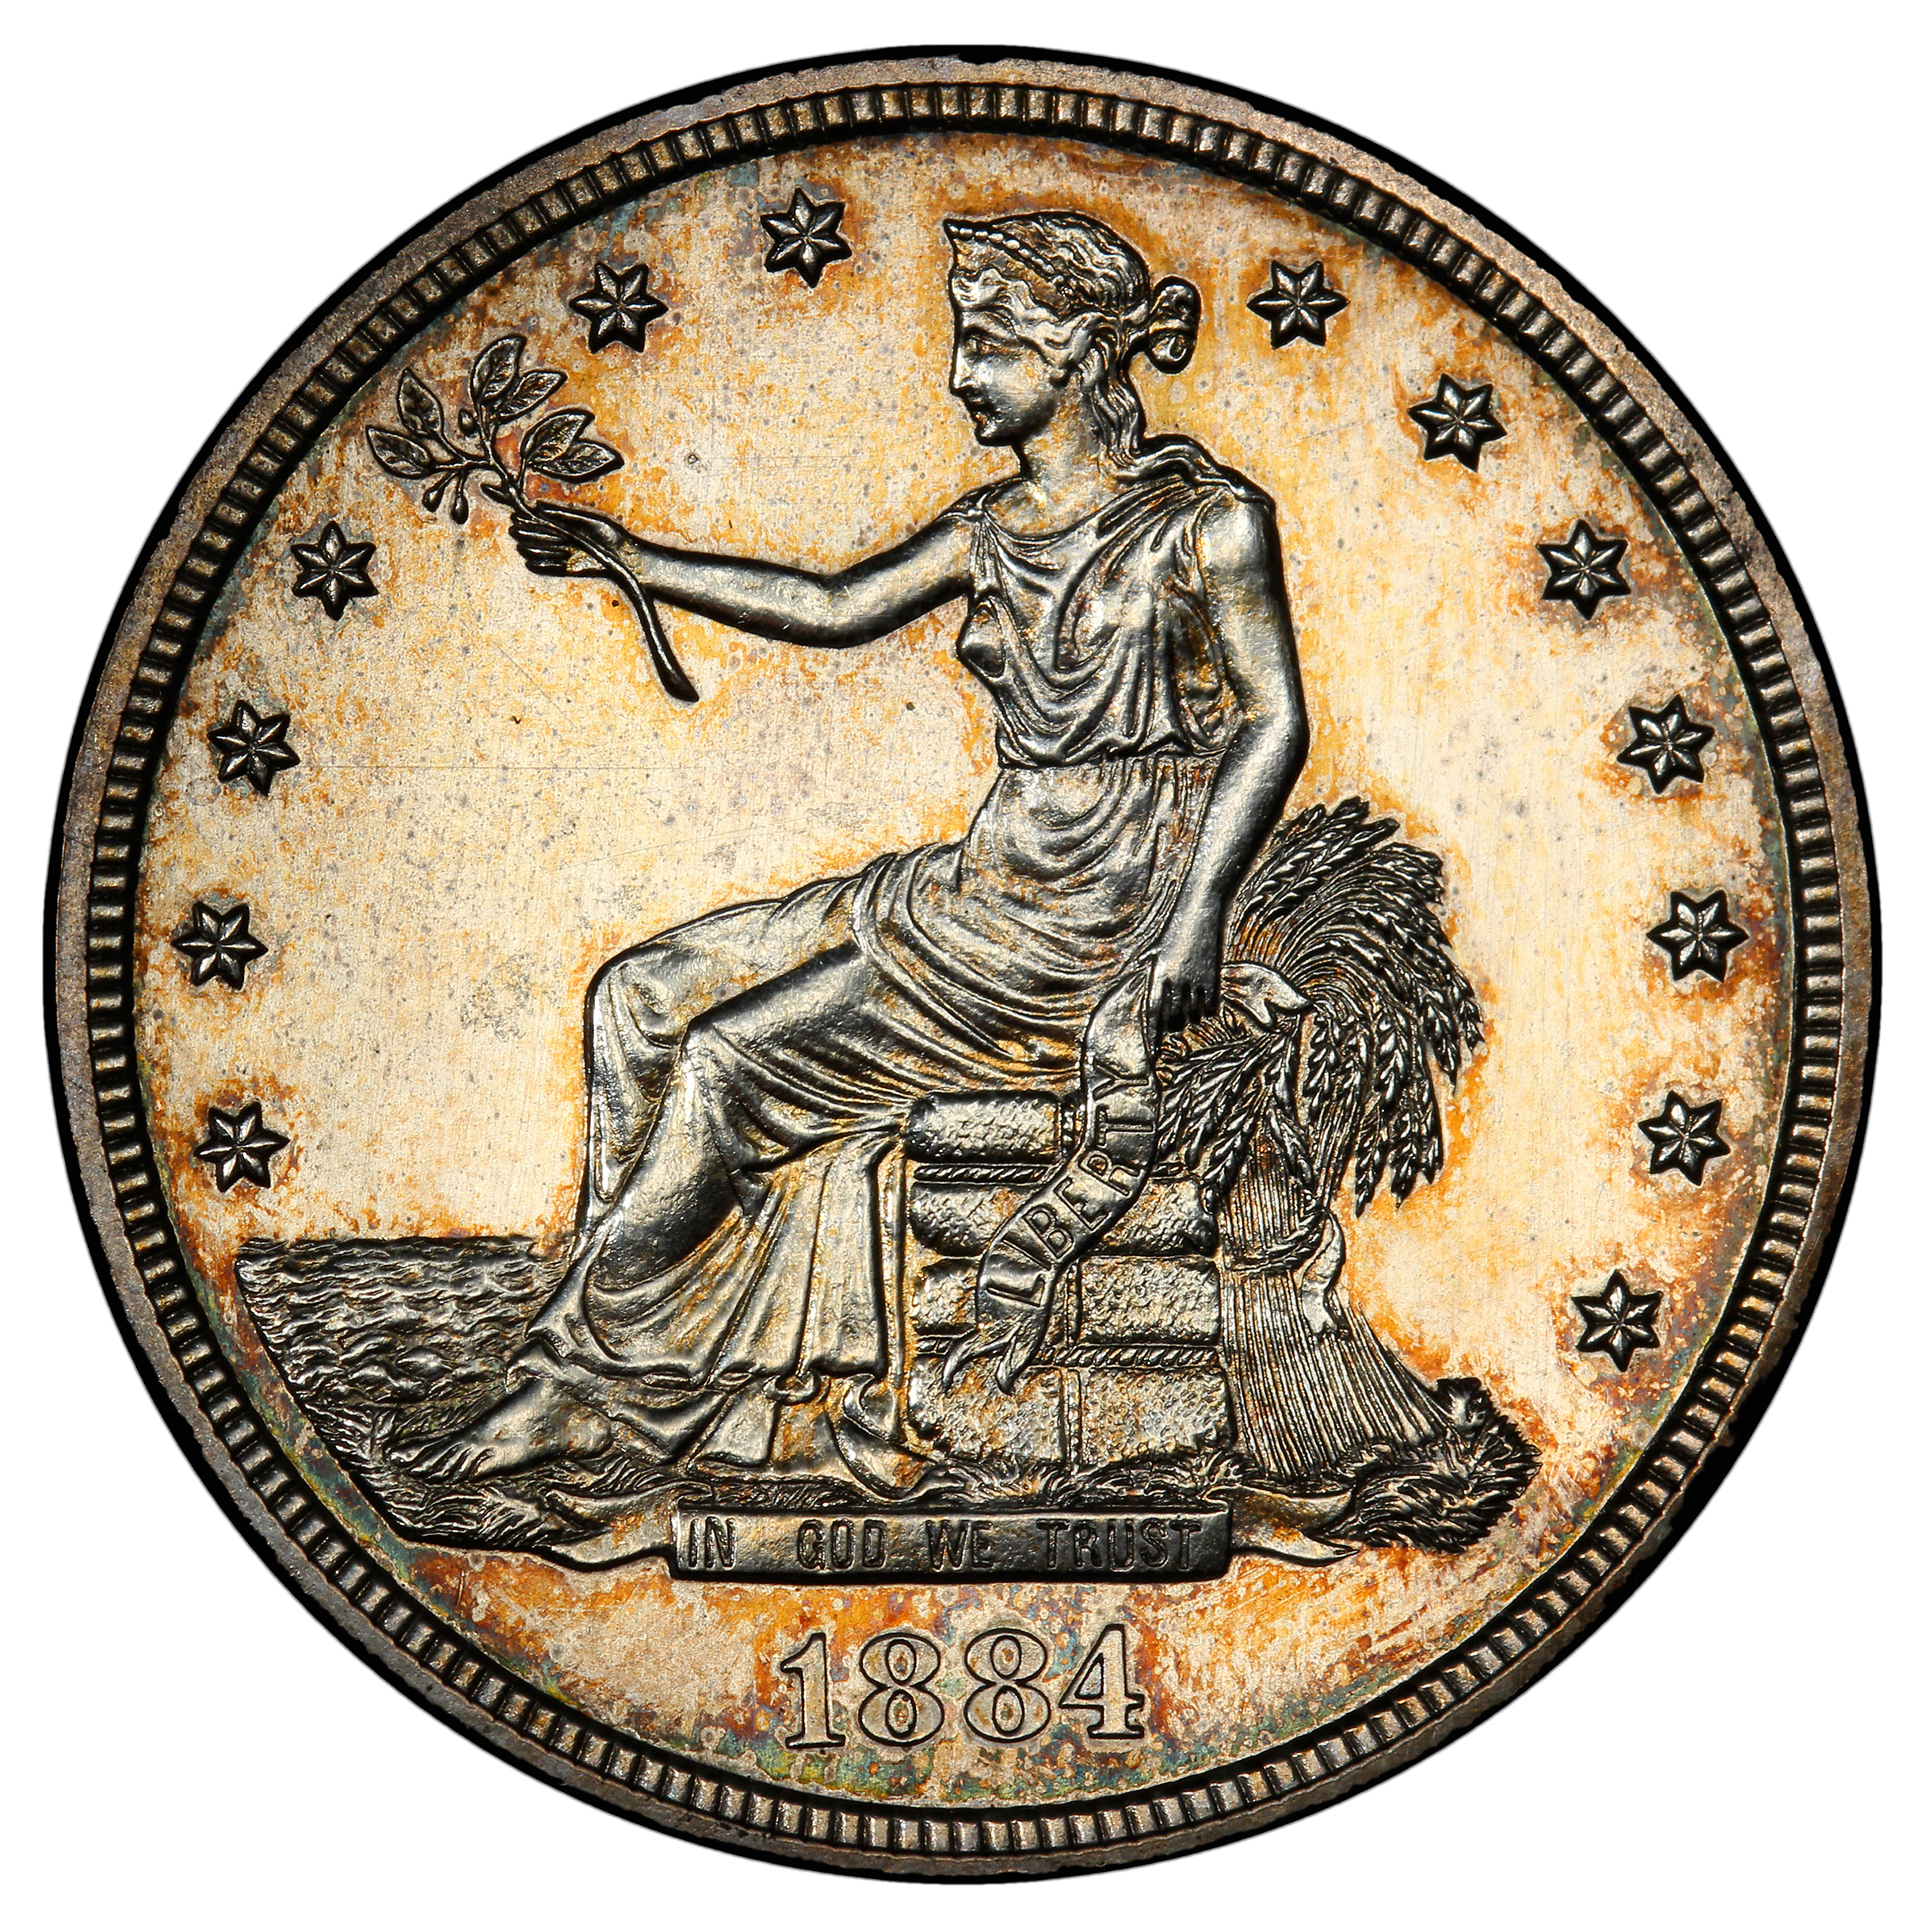 Obverse design of the 1884 Trade Dollar